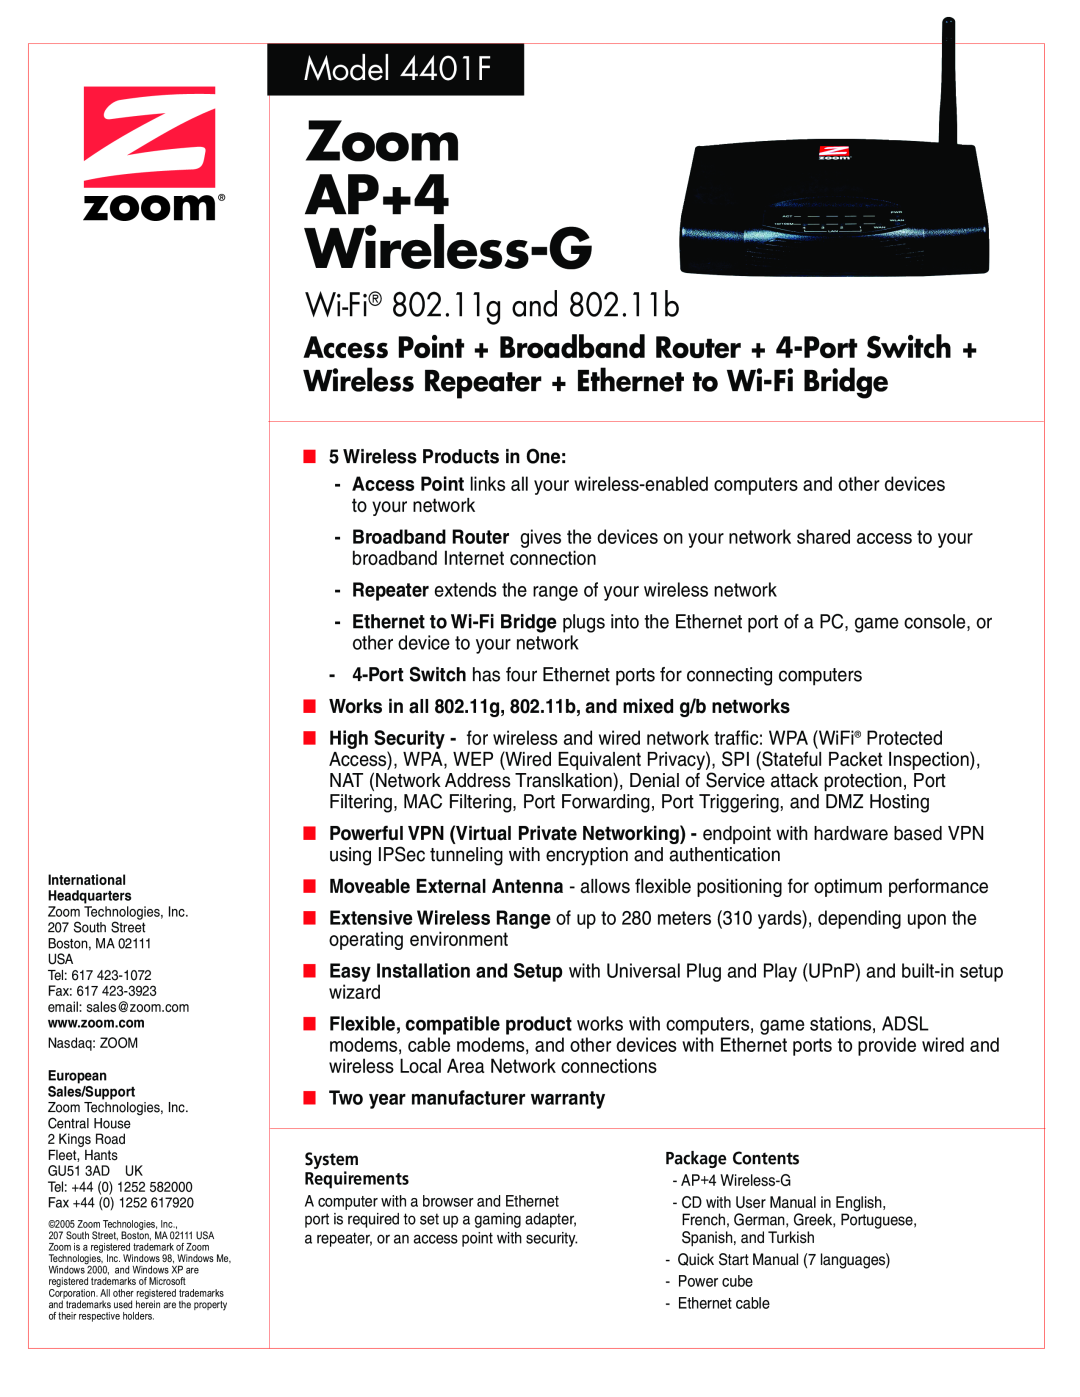 Zoom warranty Zoom AP+4 Wireless-G, Model 4401F, Wi-Fi 802.11g and 802.11b, Wireless Products in One 